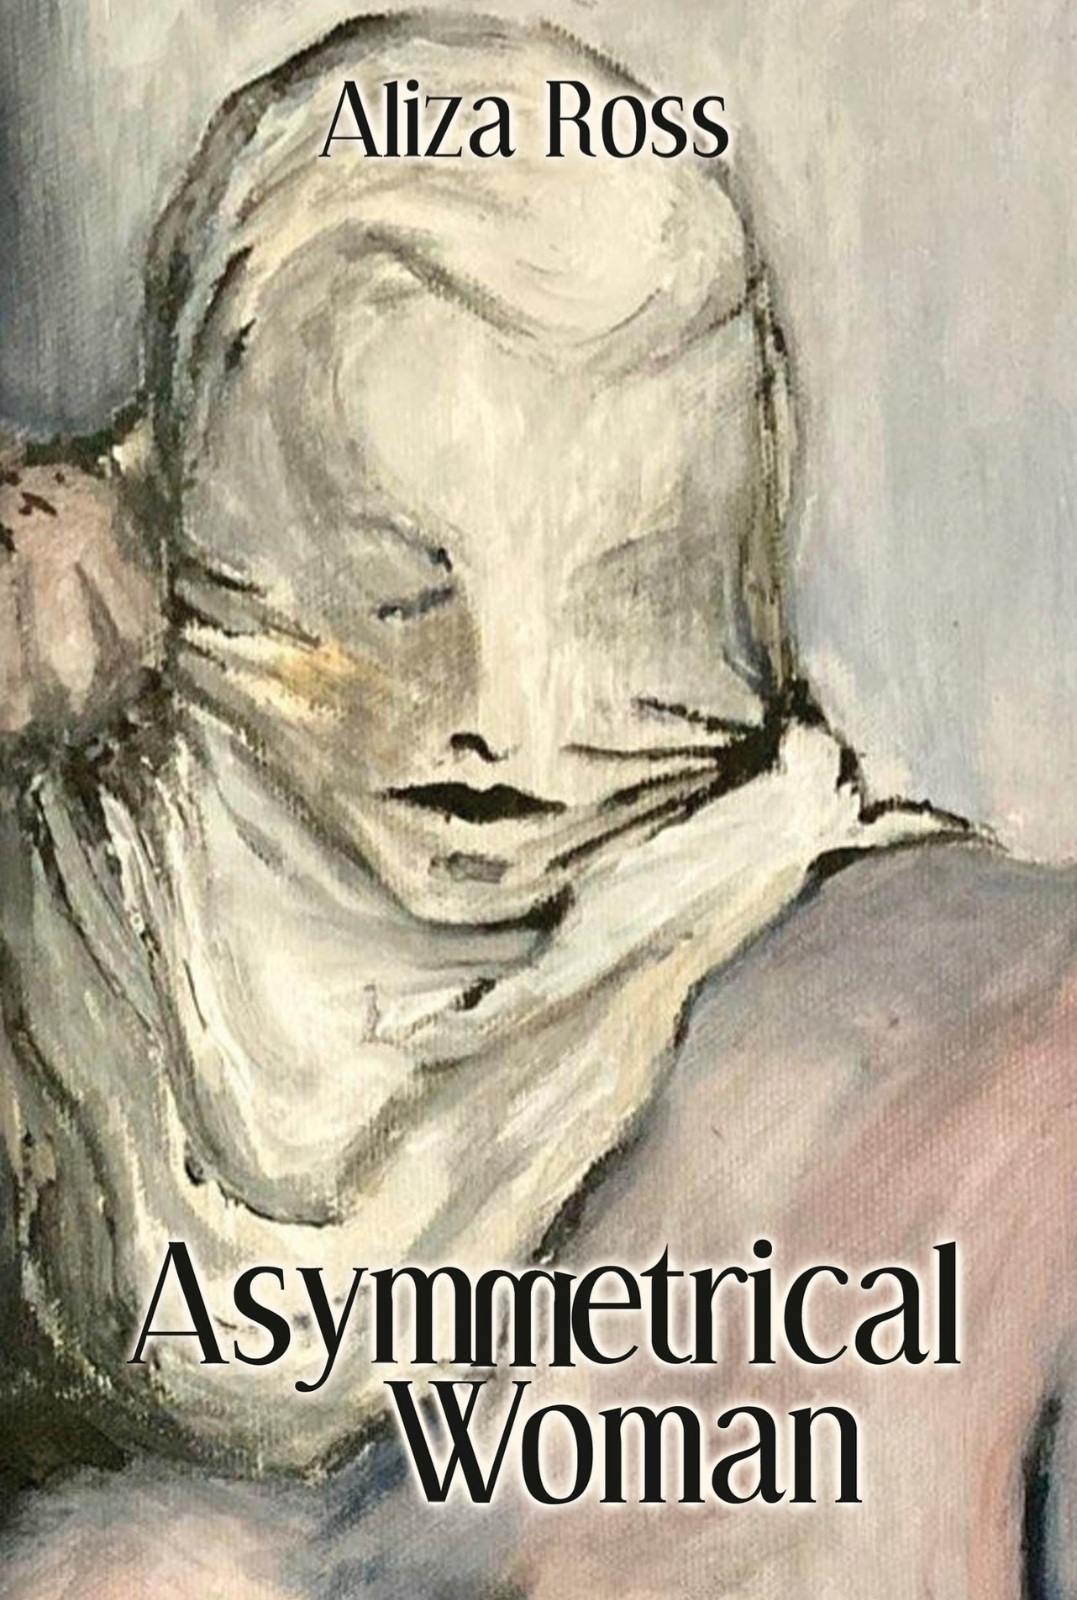 FREE: ASYMMETRICAL WOMAN by Aliza Ross